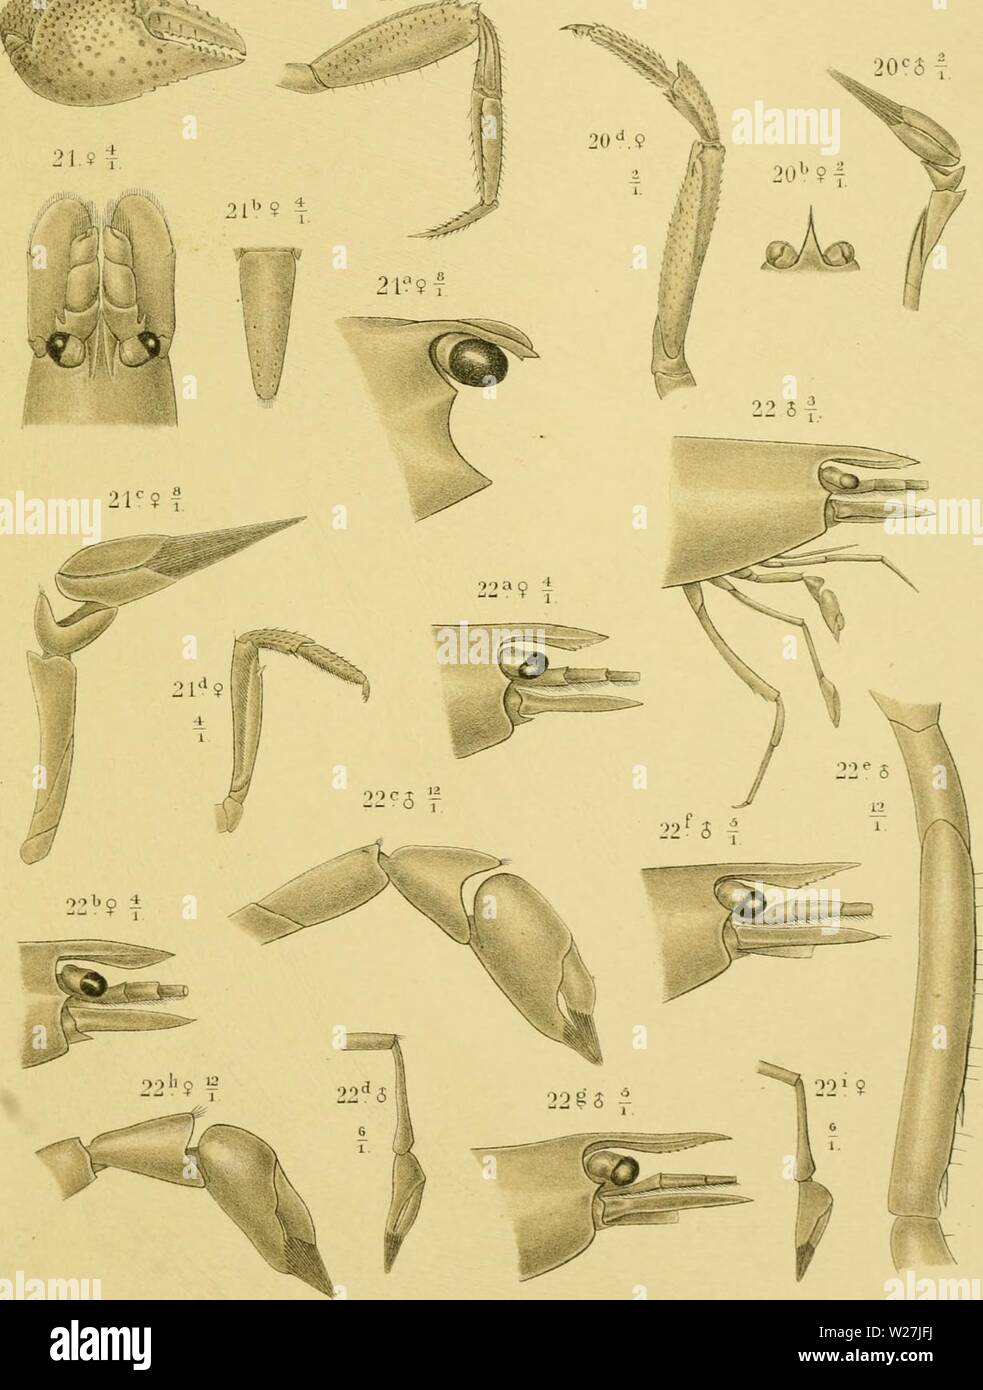 Archive image from page 284 of Decapoden des Indischen archipels, von. Decapoden des Indischen archipels, von Dr. J.G. De Man ..  decapodendesindi00manj Year: 1892  [D':6 i 206 T.    vfG deMail del A.J J.Wende] hth. PW.M-Trapirapr 19. Sesarma maculata //. sj&gt;. 20. Aiya moluccensis Jf Haan.'''] 21. Atya brevirostris ;/. sp. 22. Caridina typus M. E. p.JtfO Stock Photo